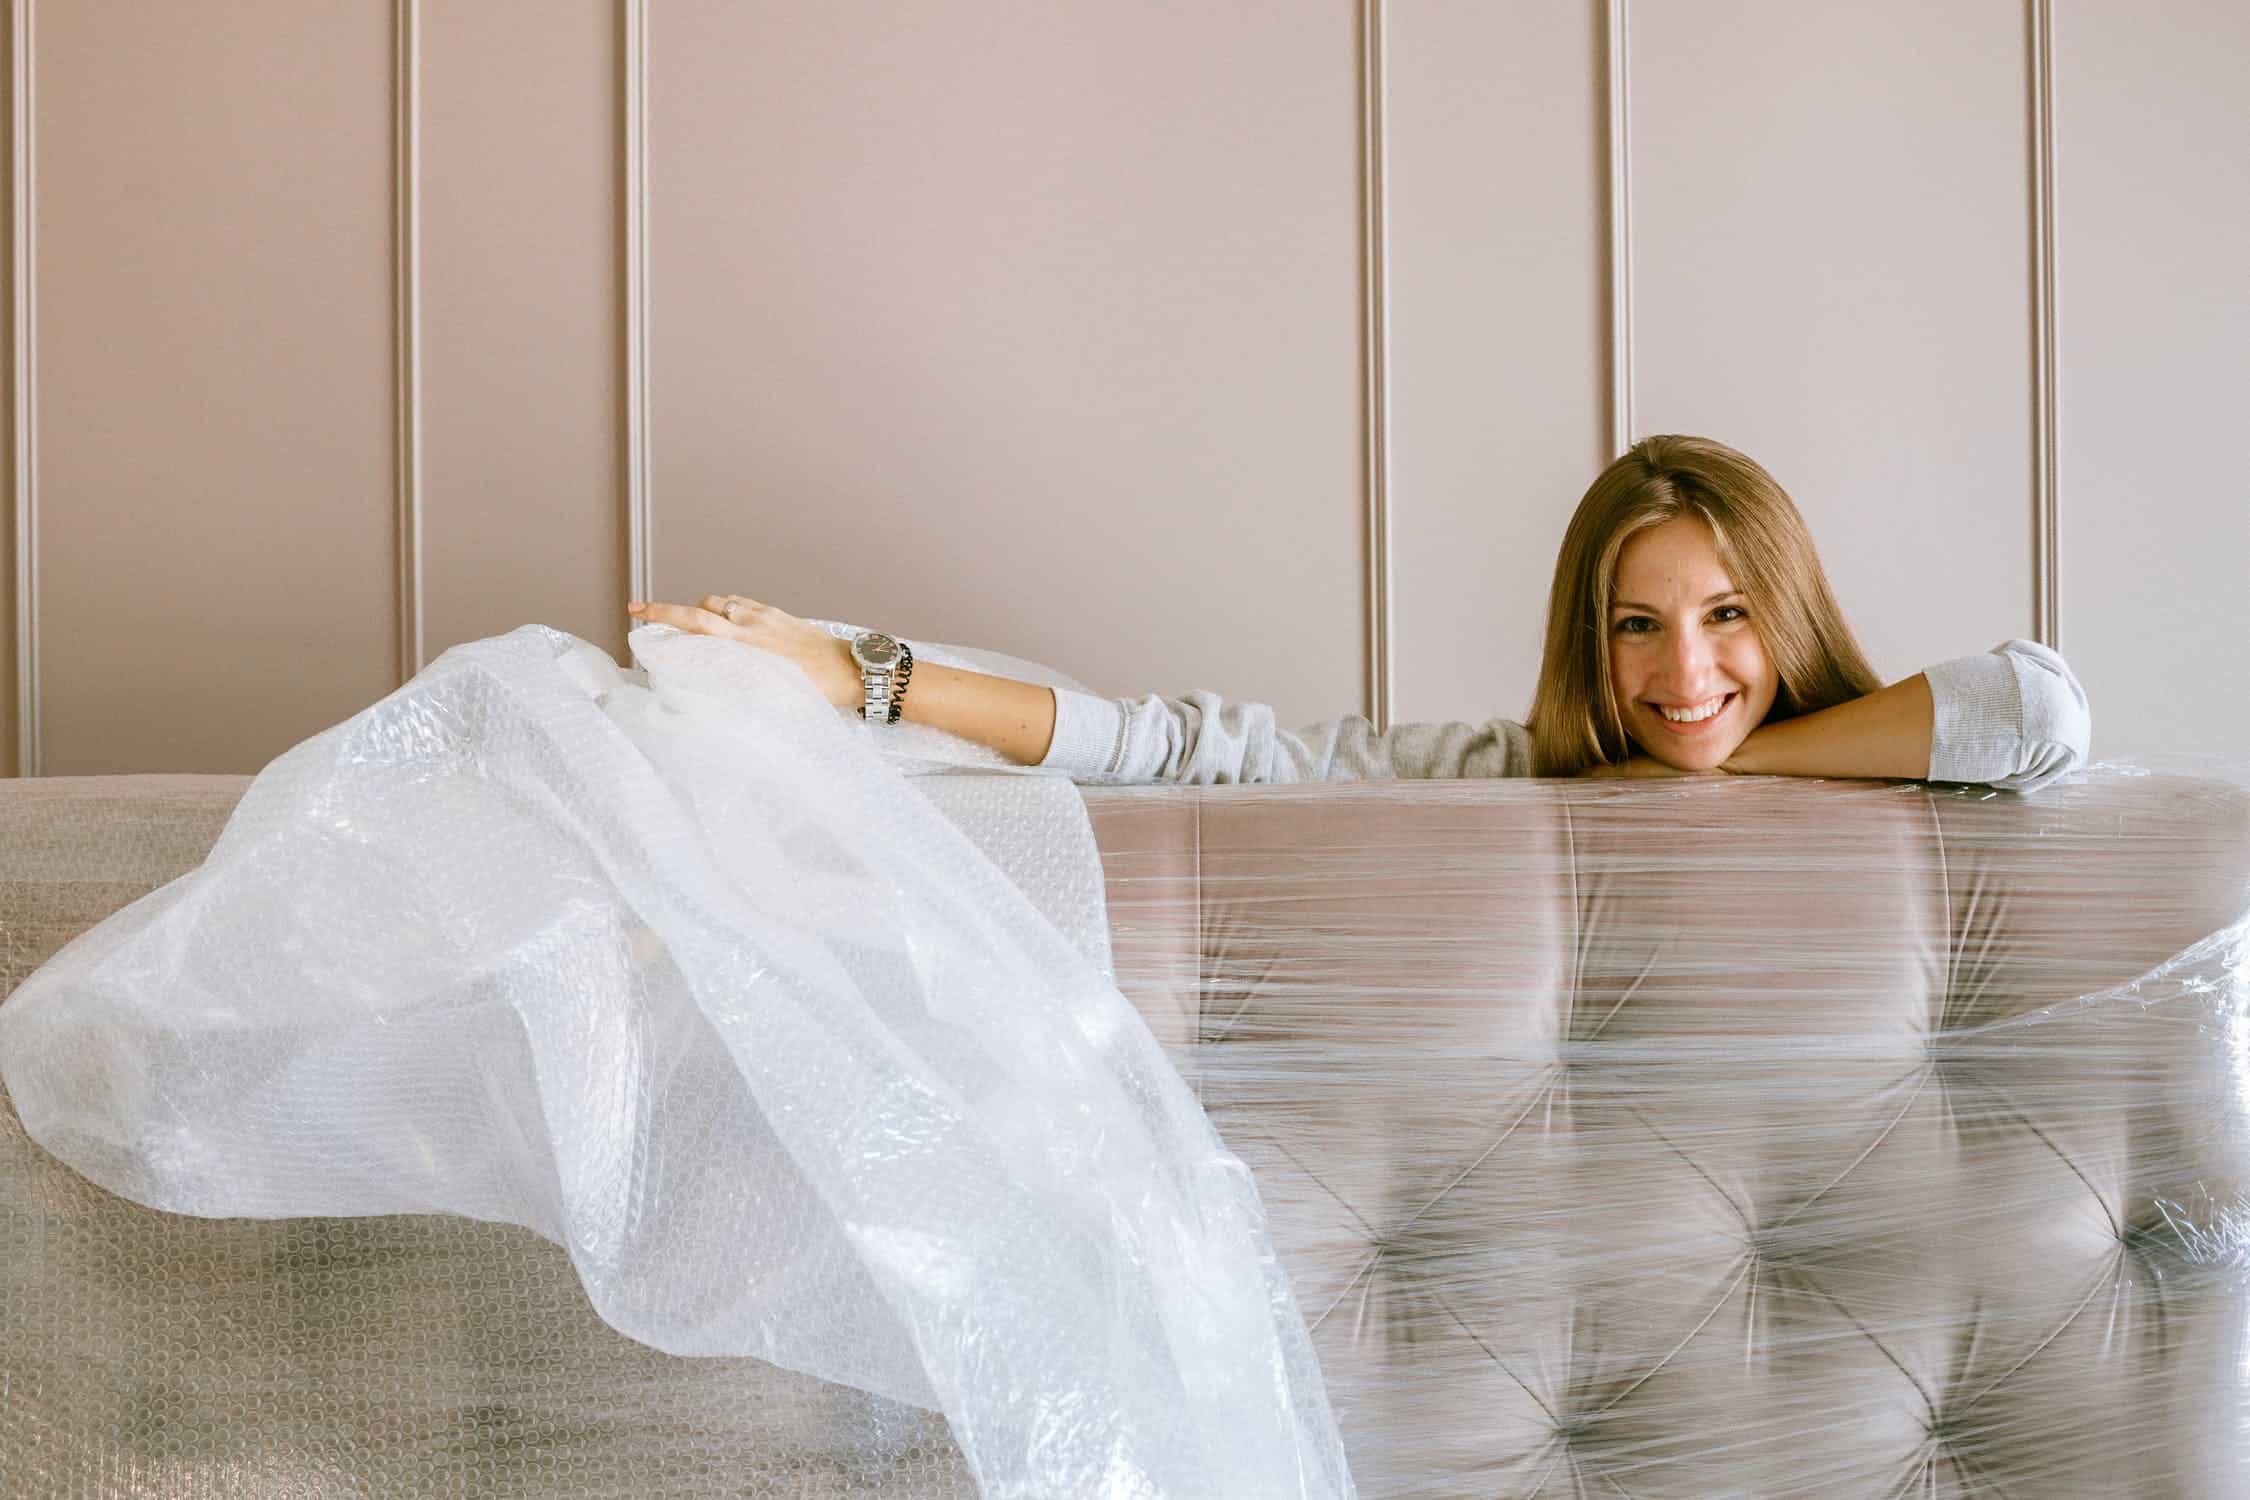 Woman wrapping a mattress